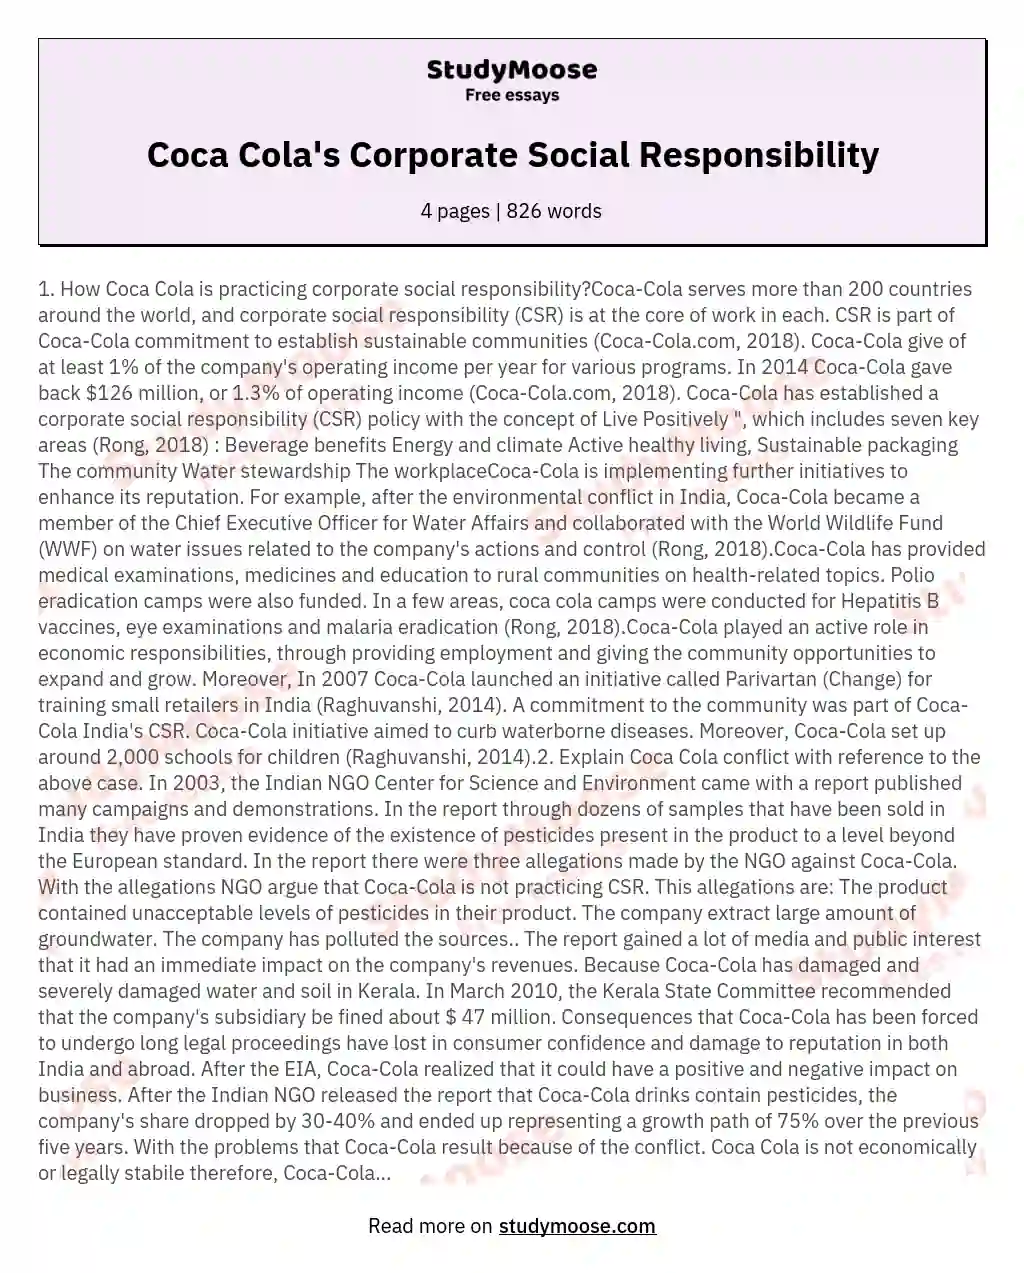 Coca Cola's Corporate Social Responsibility essay